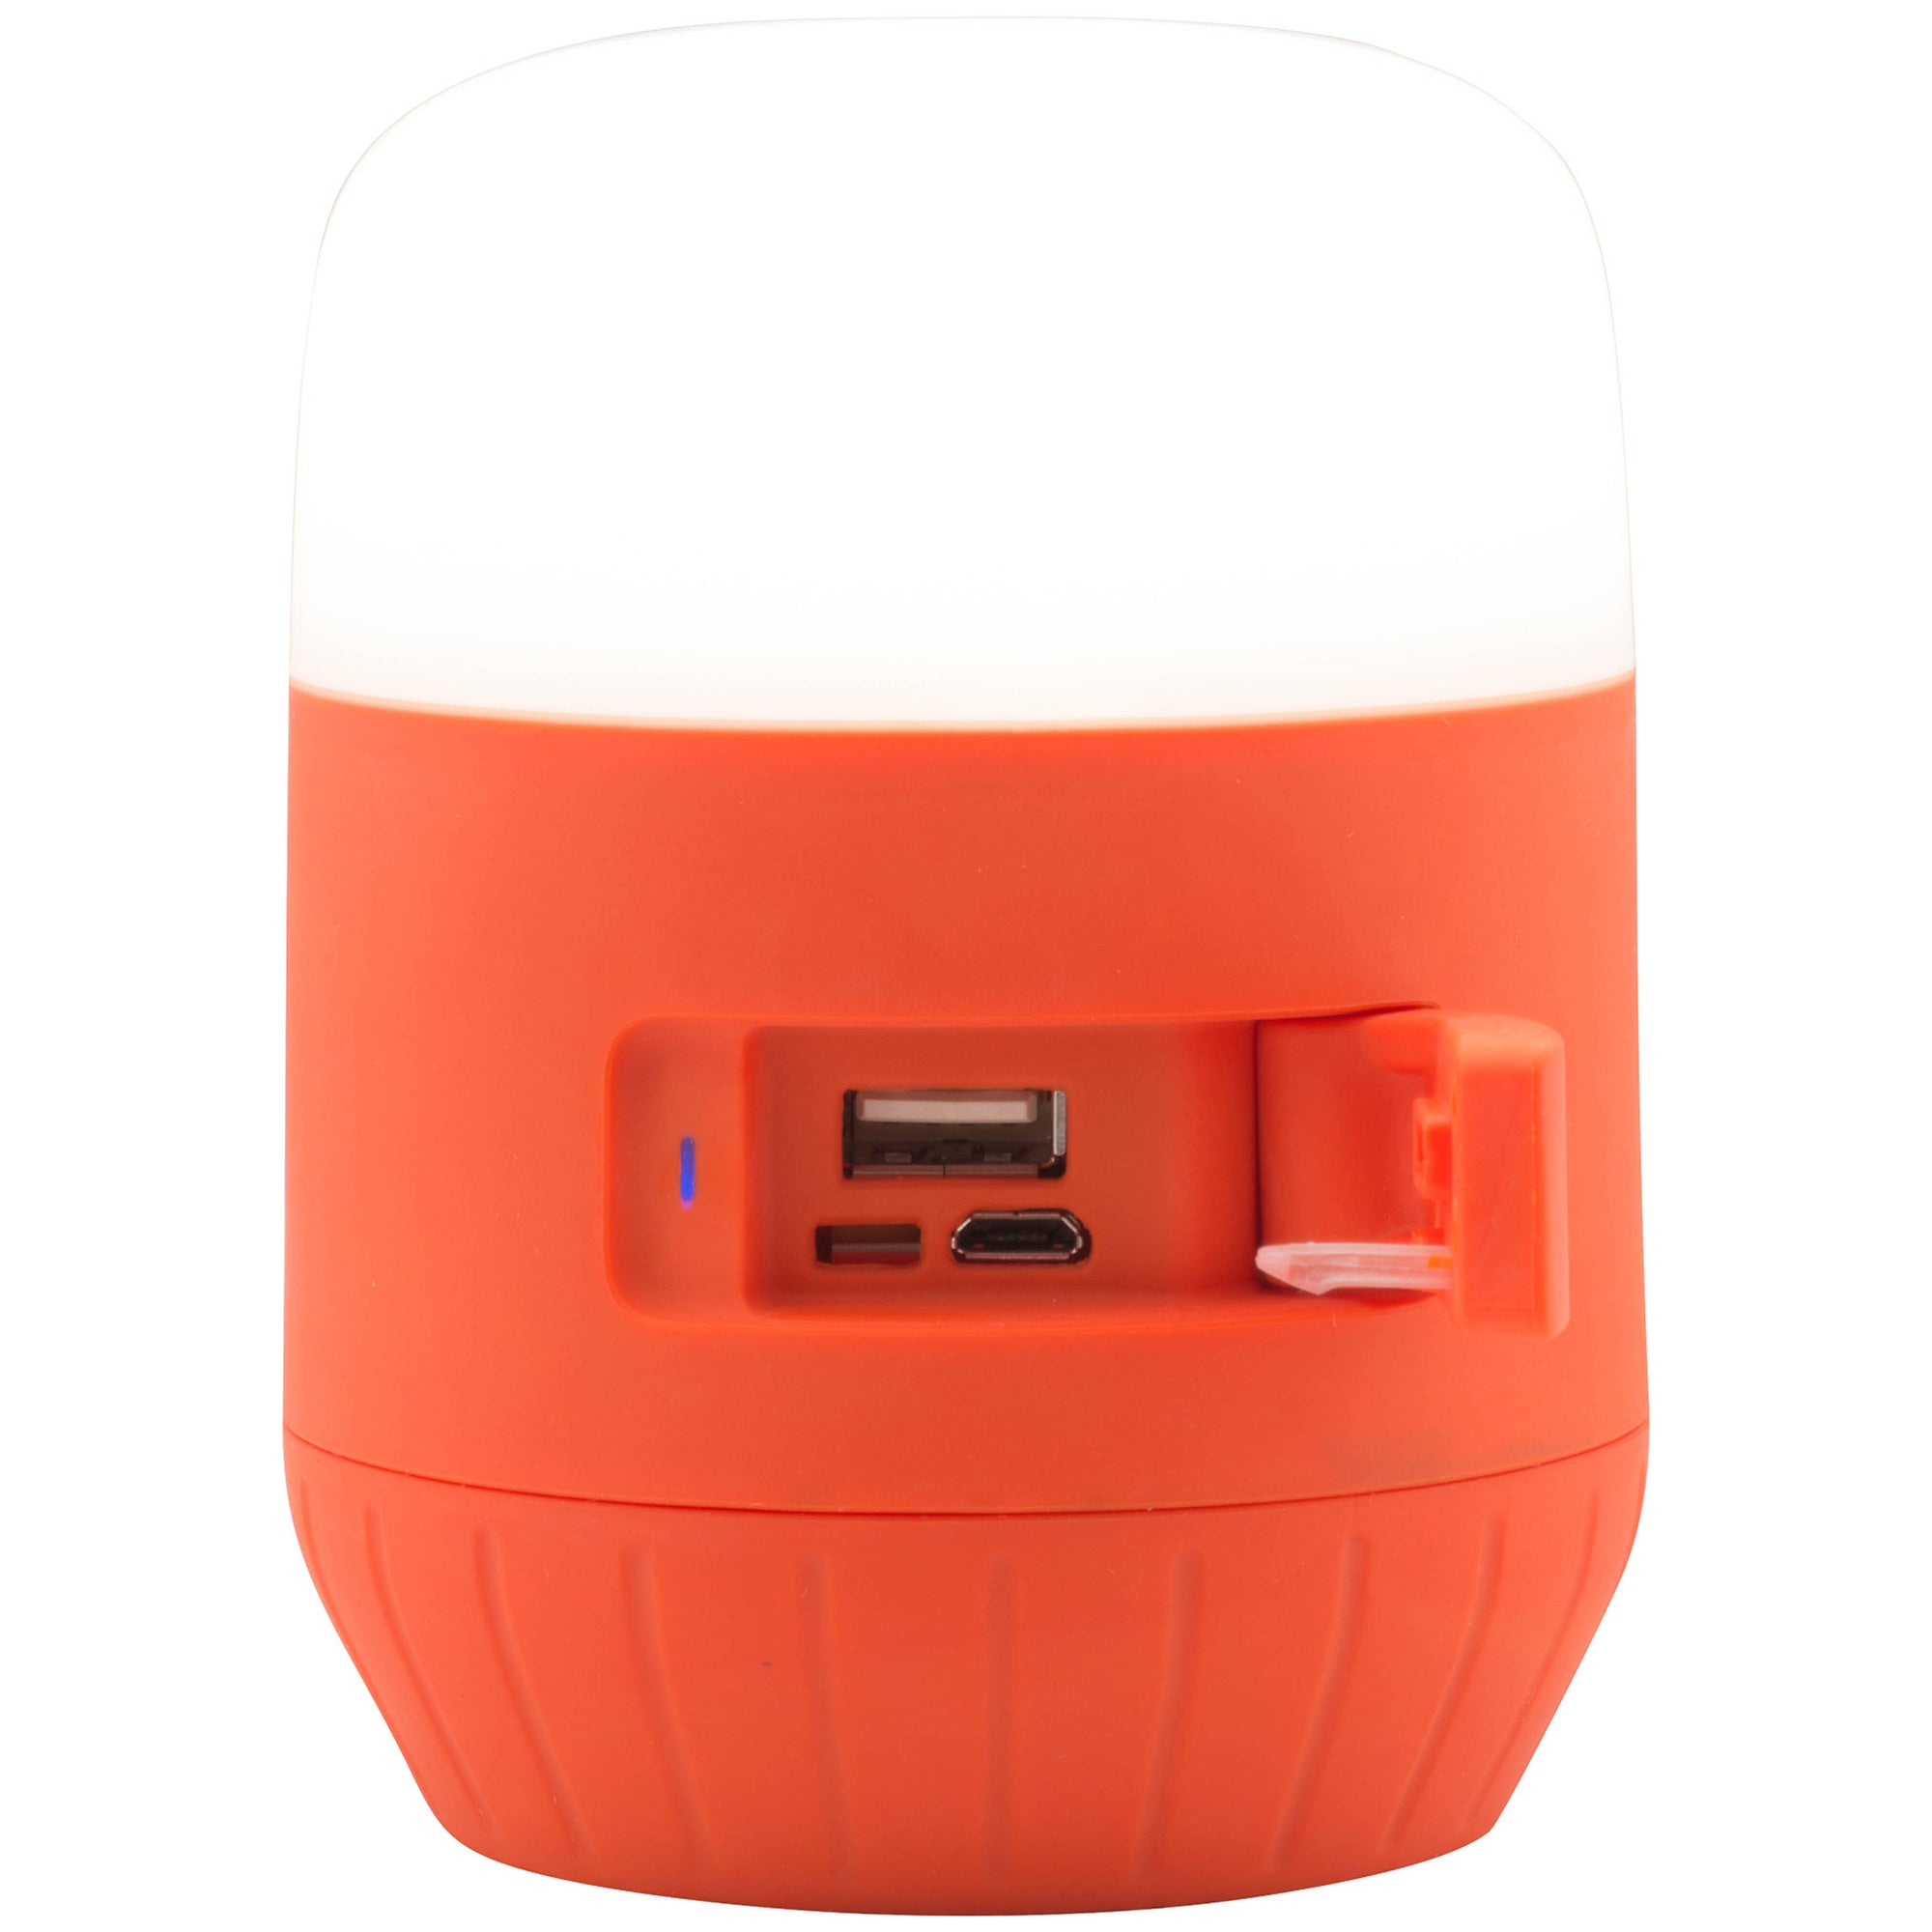 orange lantern with charging port open